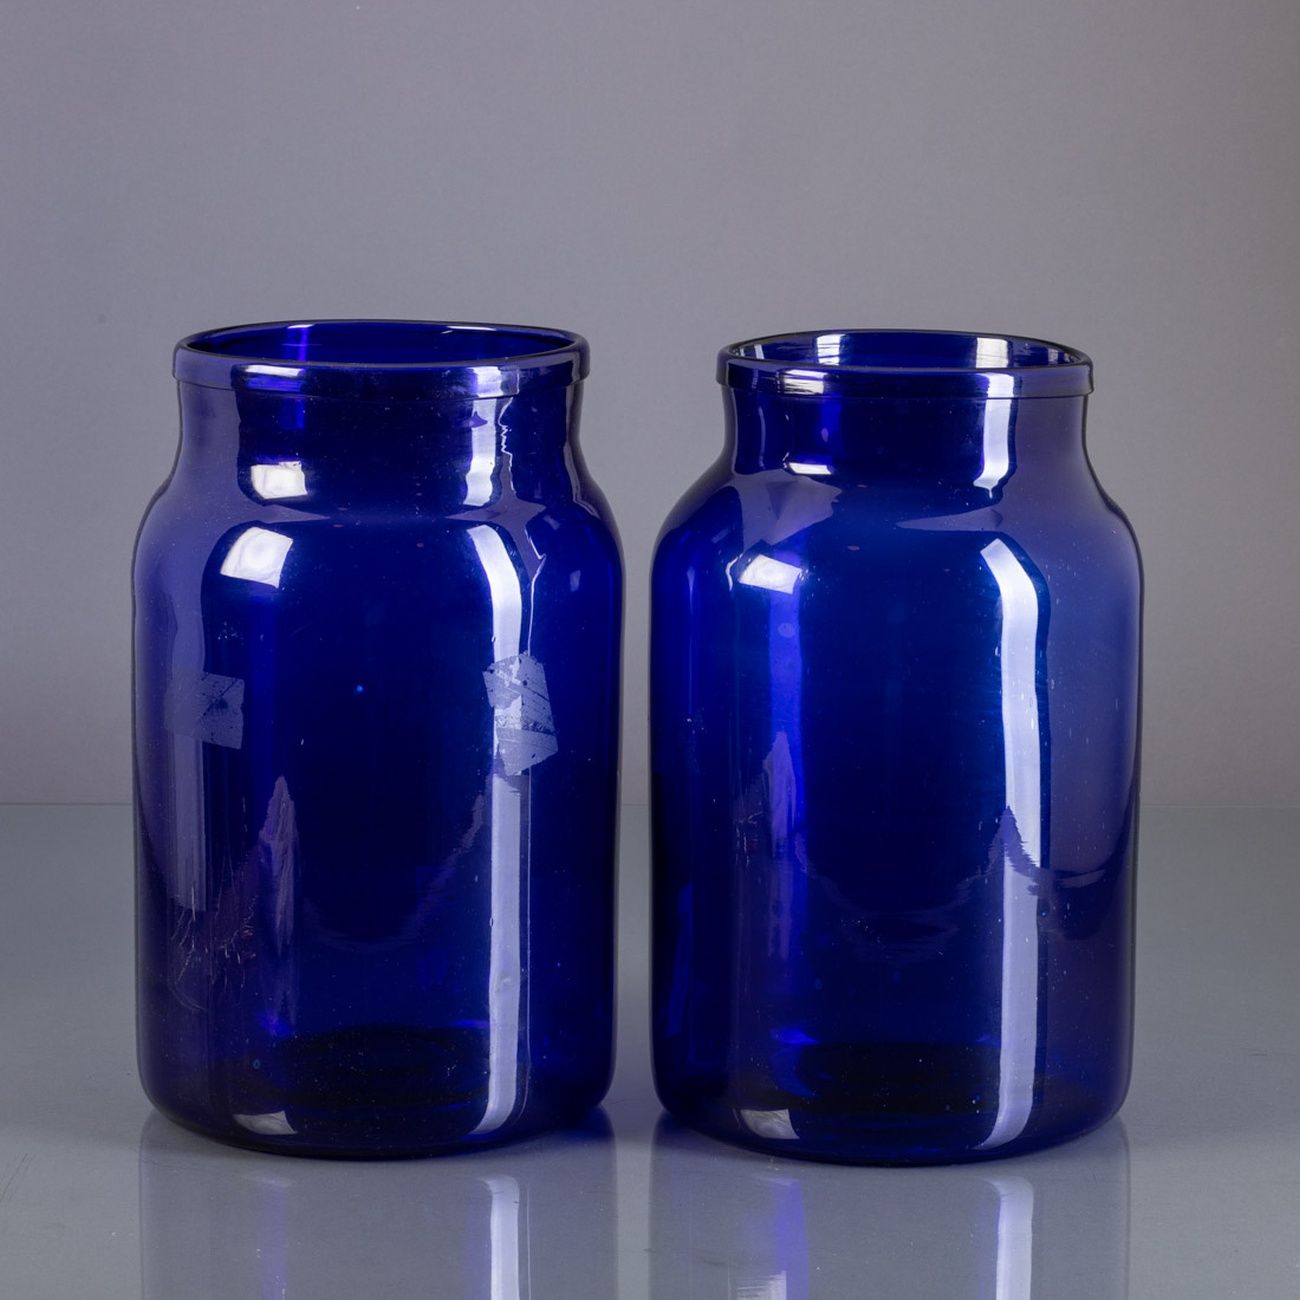 DOIS FRASCOS DE FARMÁCIA 两个蓝色玻璃制的药瓶。有使用痕迹。_x000D_

尺寸：34.5厘米。